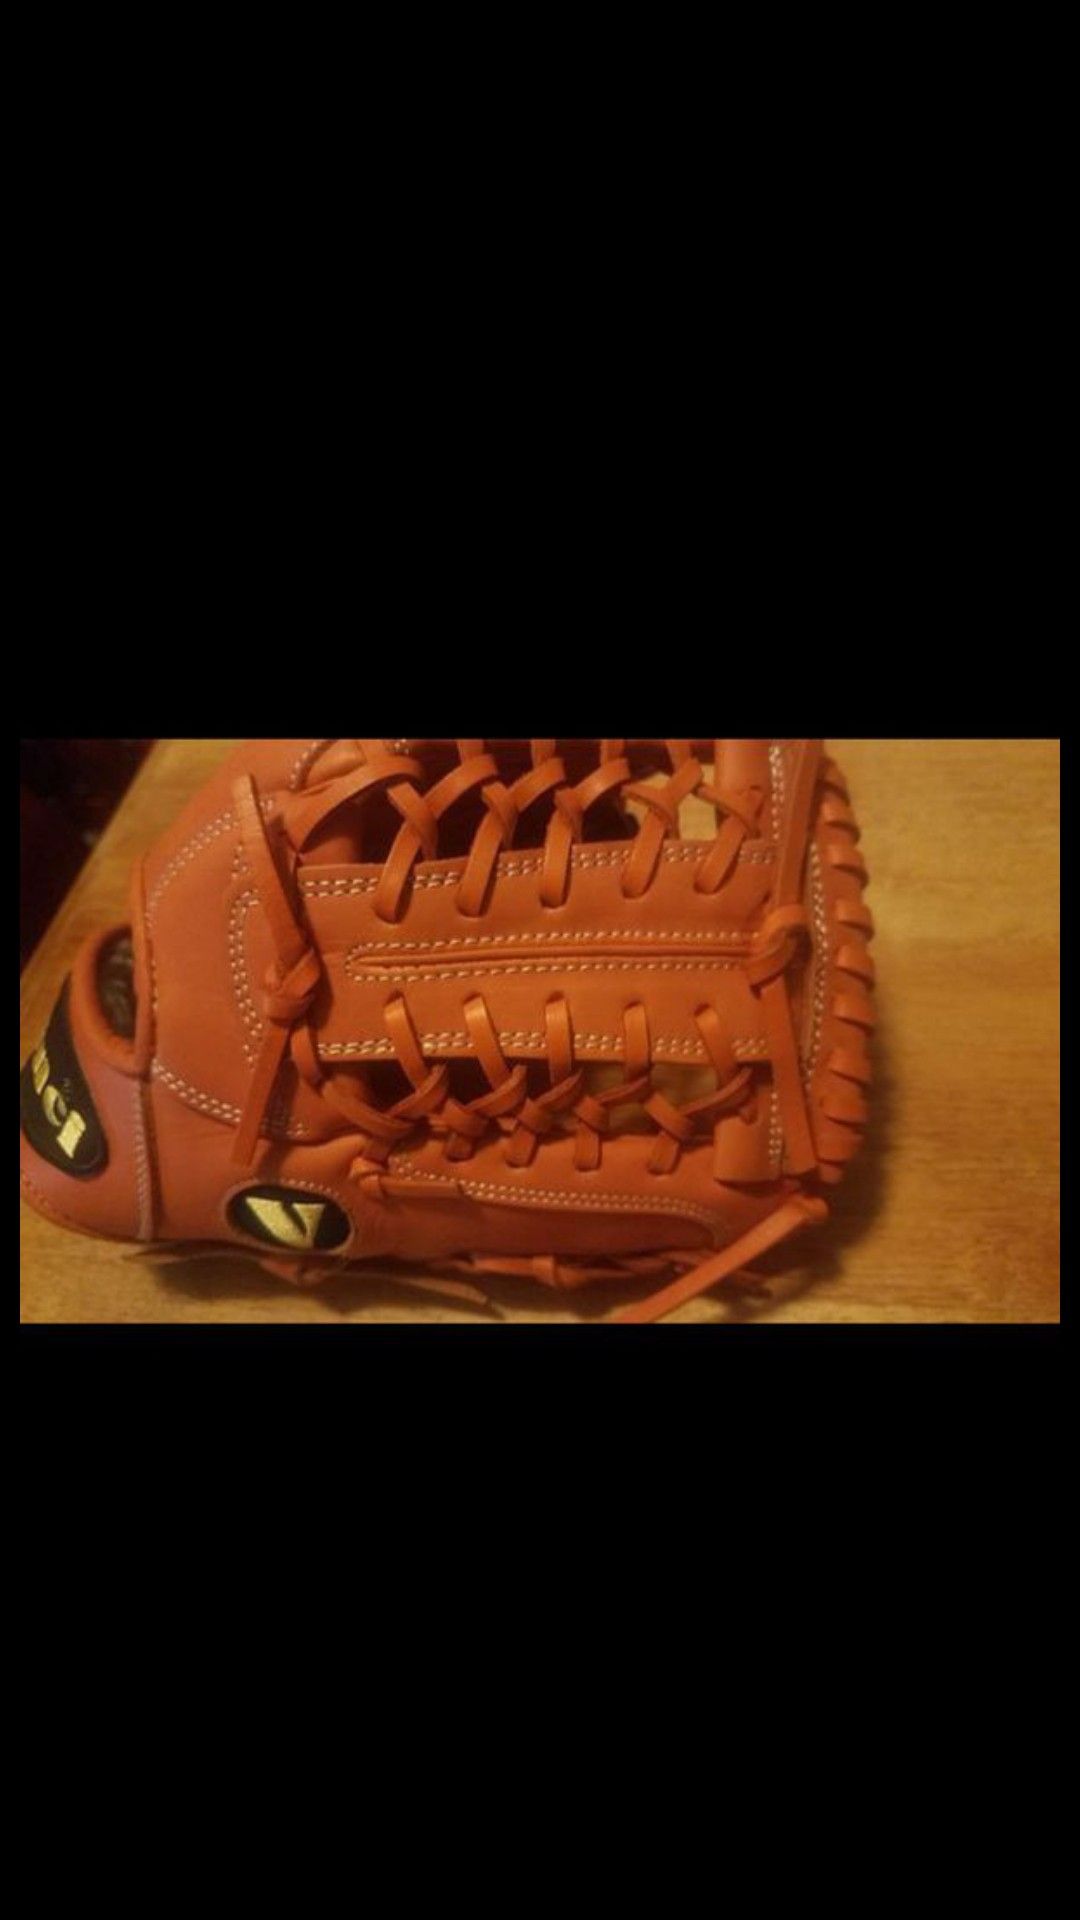 Vinci Pro Limited Series orange Baseball Glove